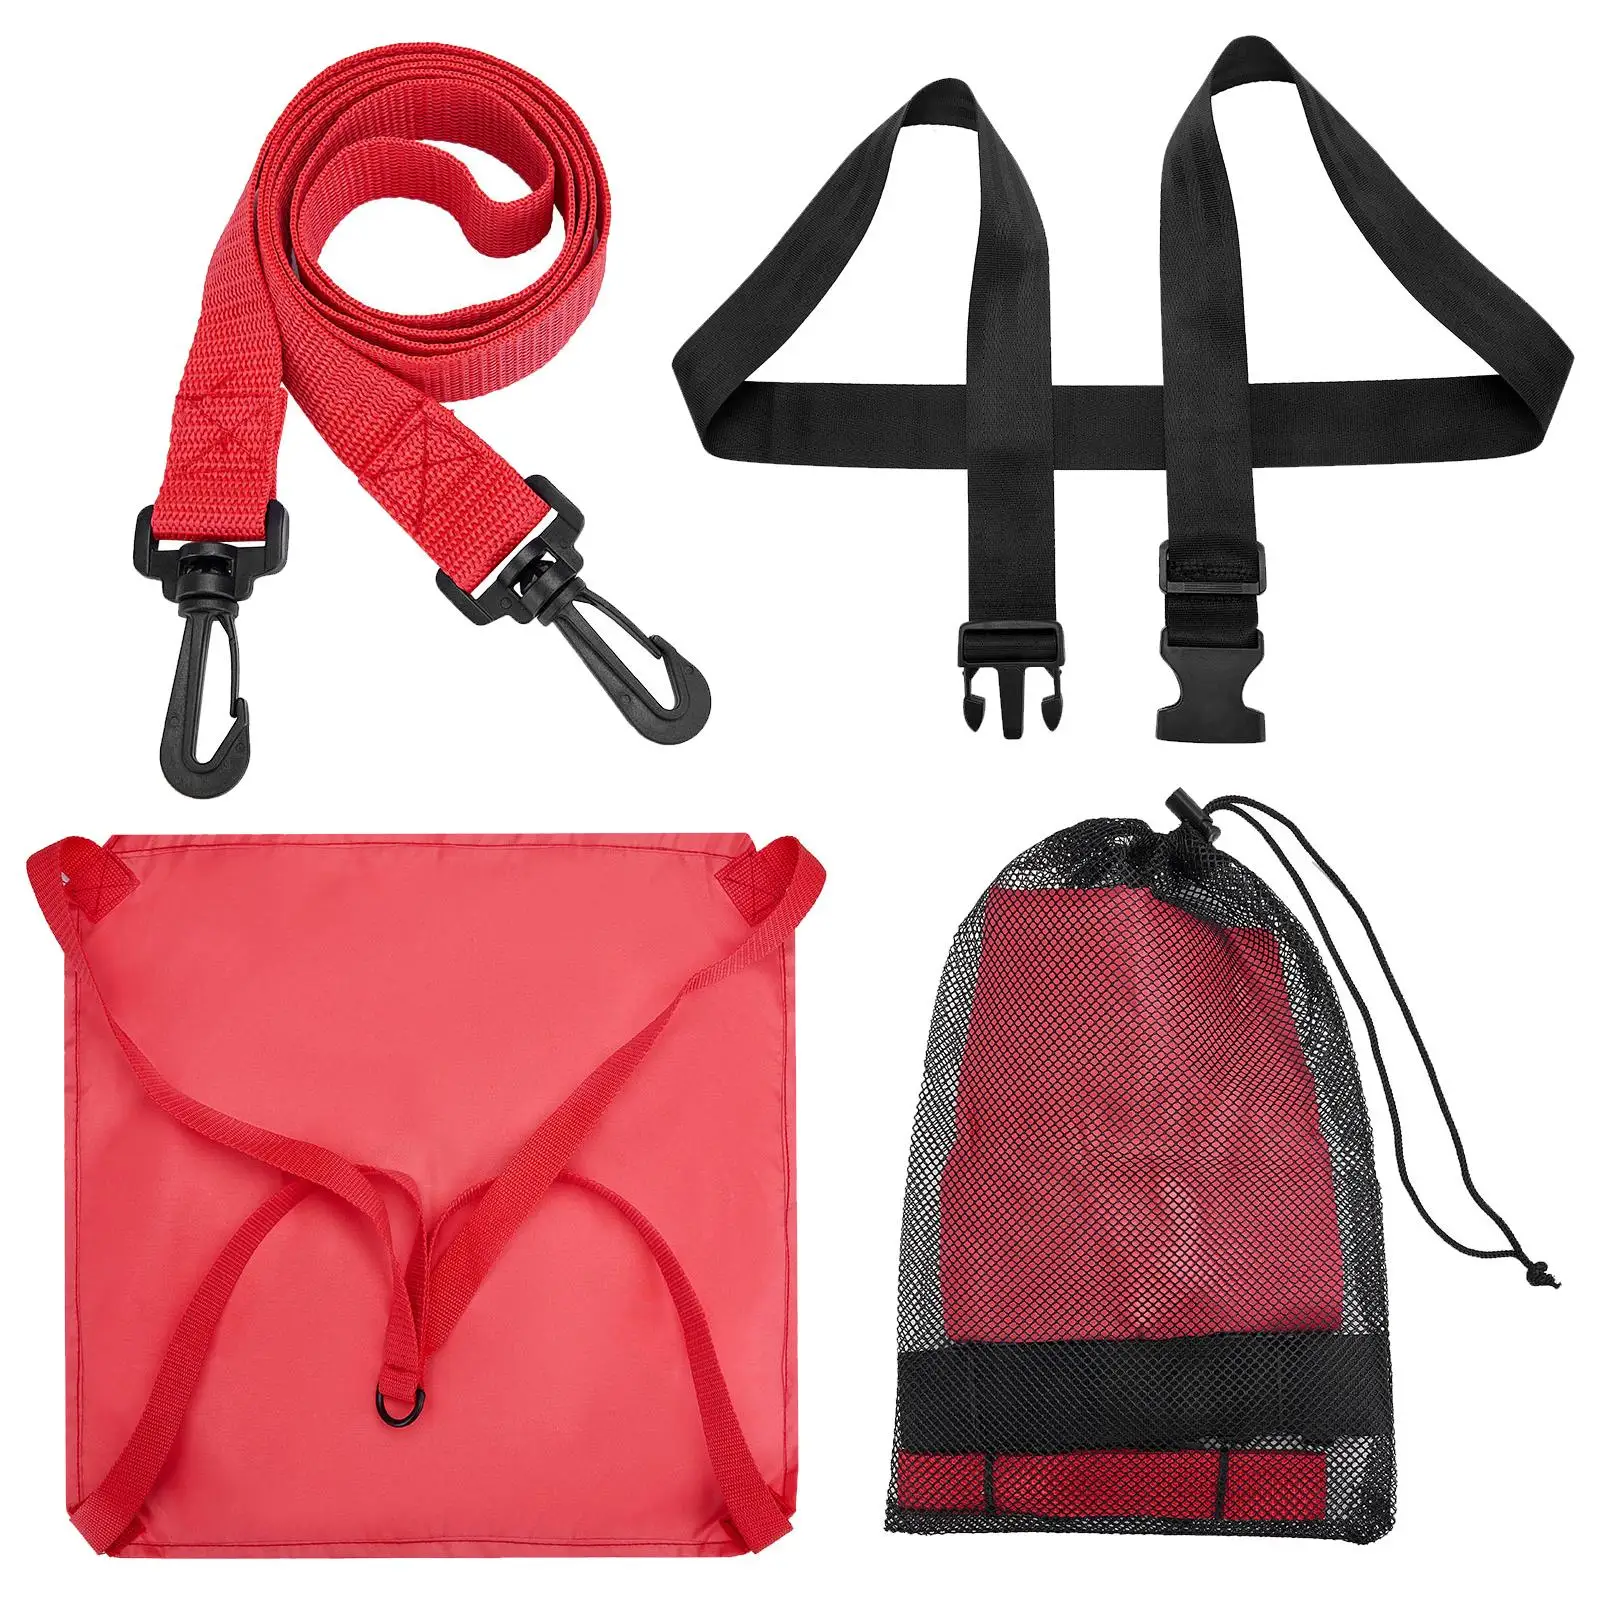 Swim Parachute Equipment Swimming Resistance Belt with Drag for Children